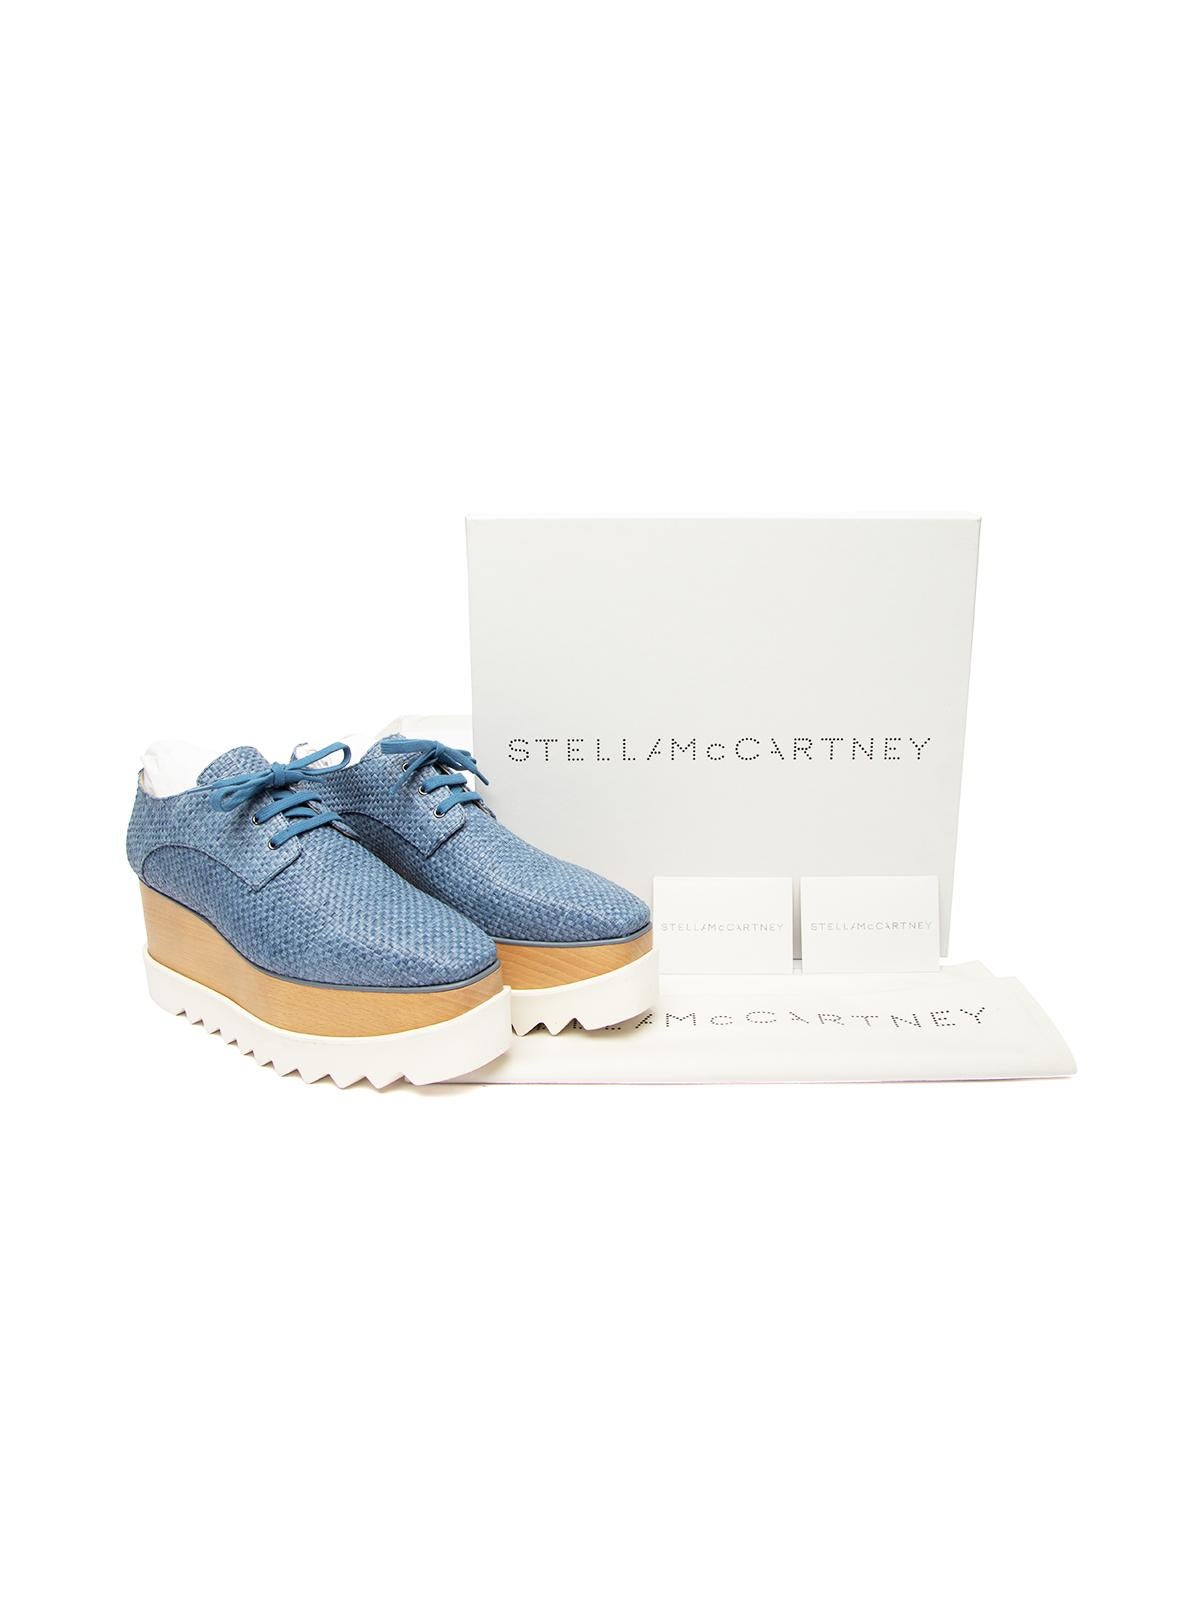 Stella McCartney Women's Elyse Platforms Shoes Farfia 3